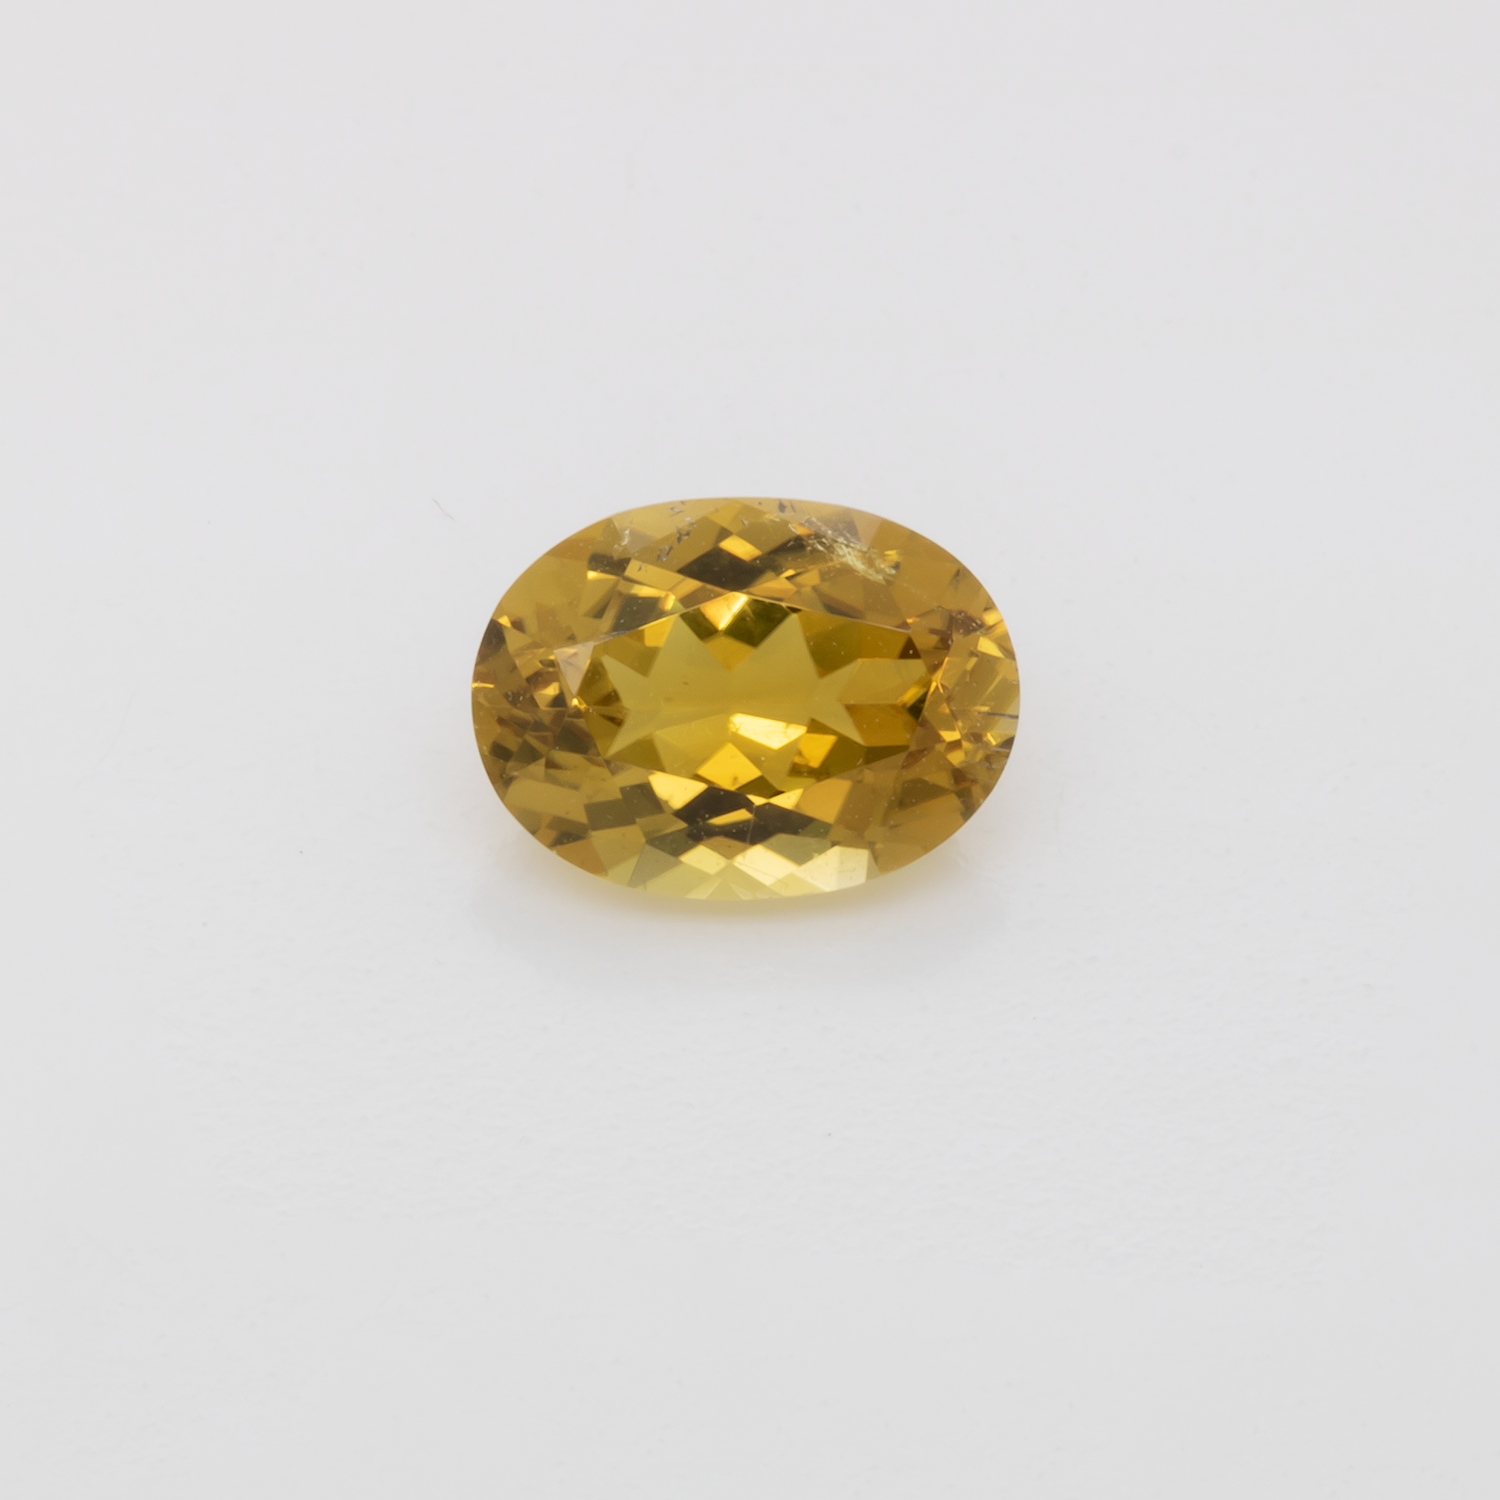 Turmalin - gelb, oval, 7,9x5,8 mm, 1,20 cts, Nr. TR101329